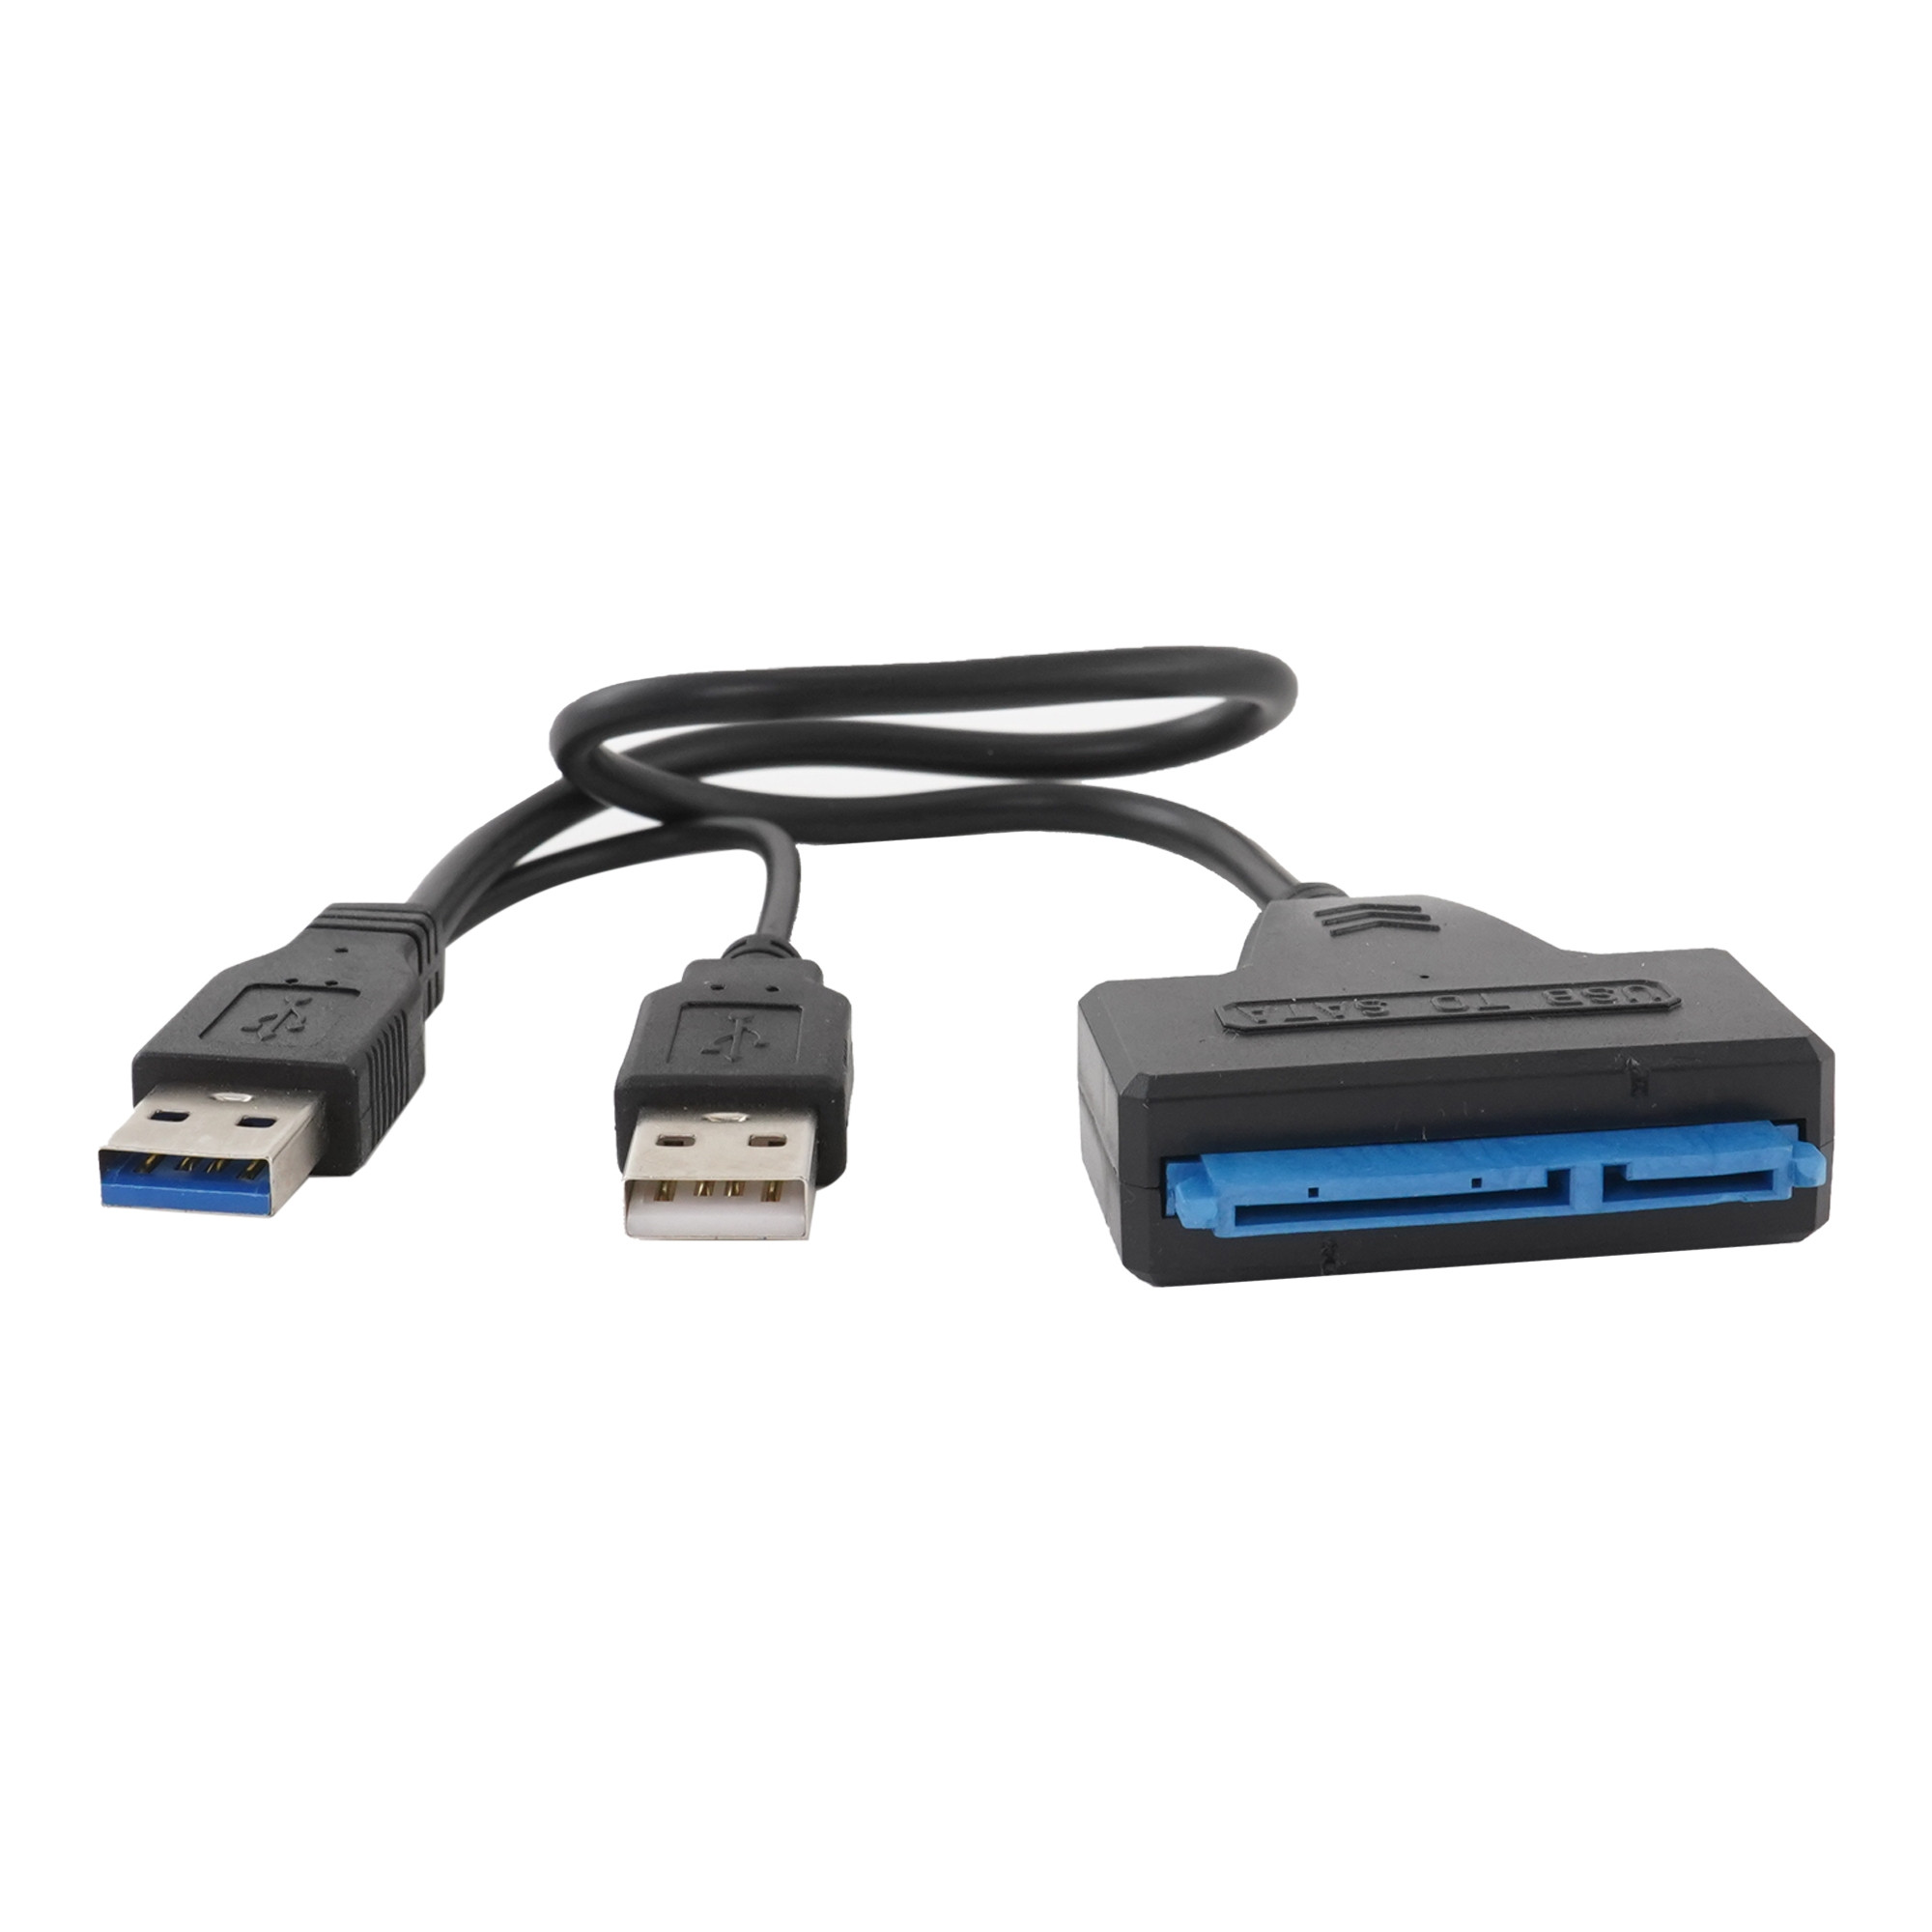 Купить  Переходник USB 3.0 на SATA